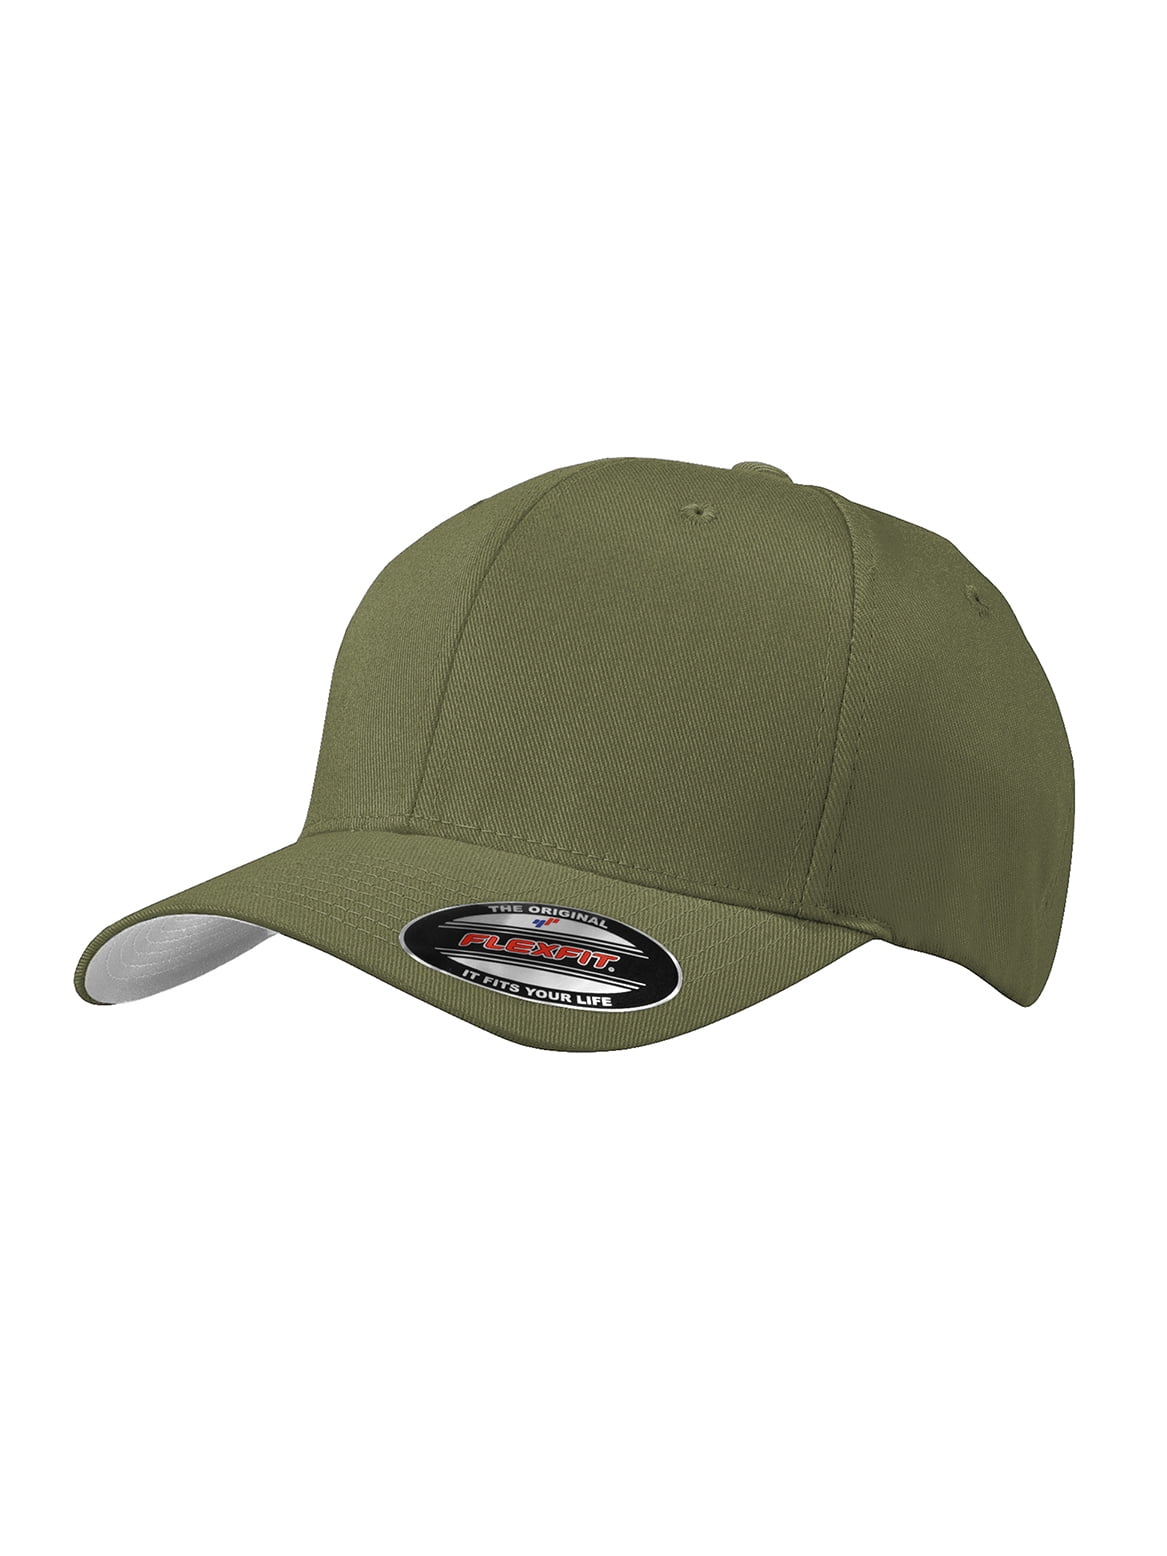 Top Headwear Flex Fit Baseball Cap - Olive Drab/Green - Large/X-Large